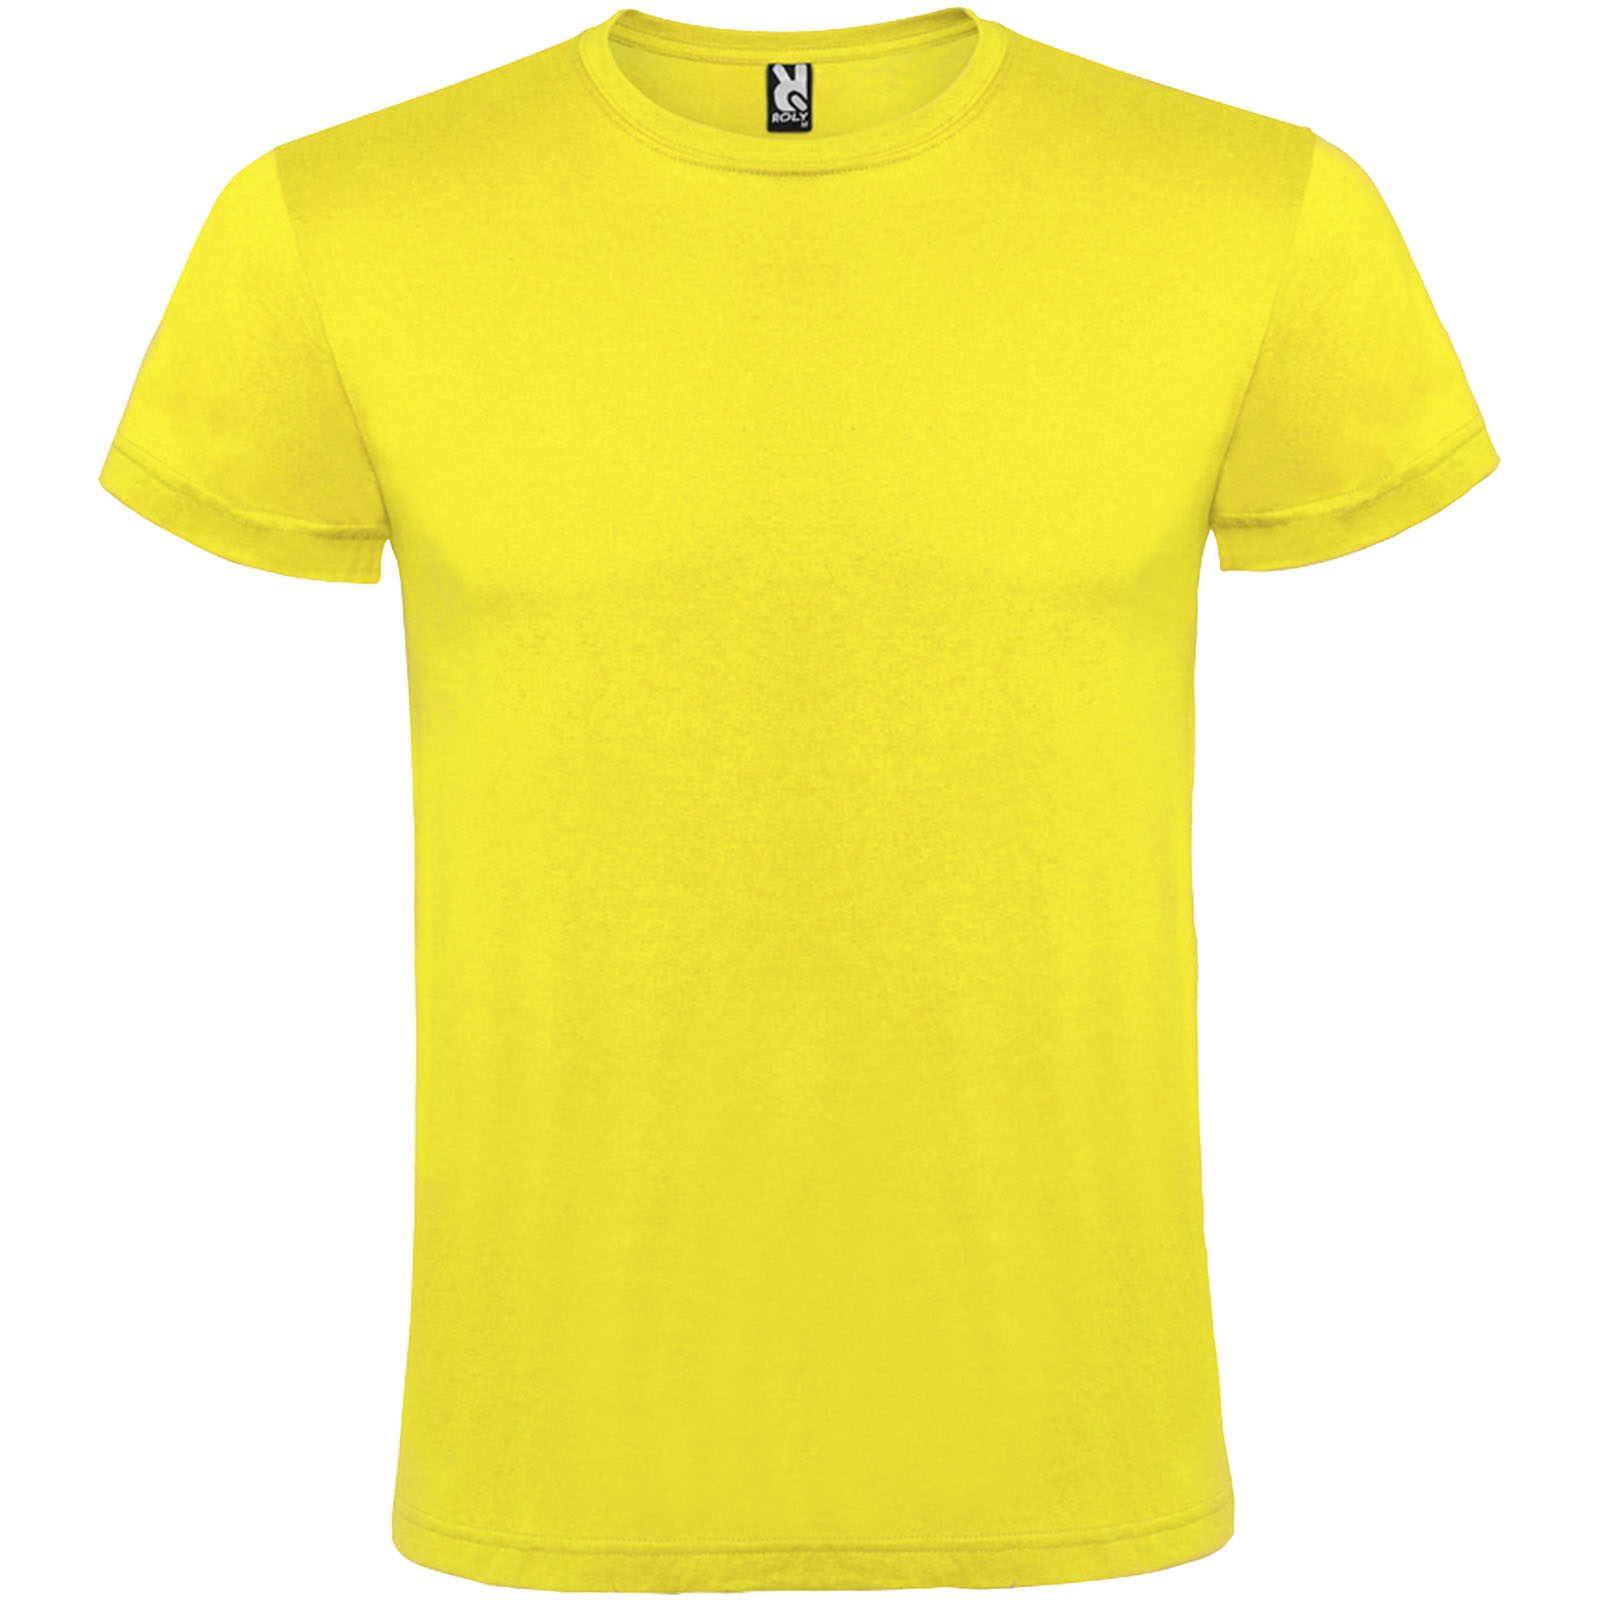 Advertising T-shirts - Atomic short sleeve unisex t-shirt